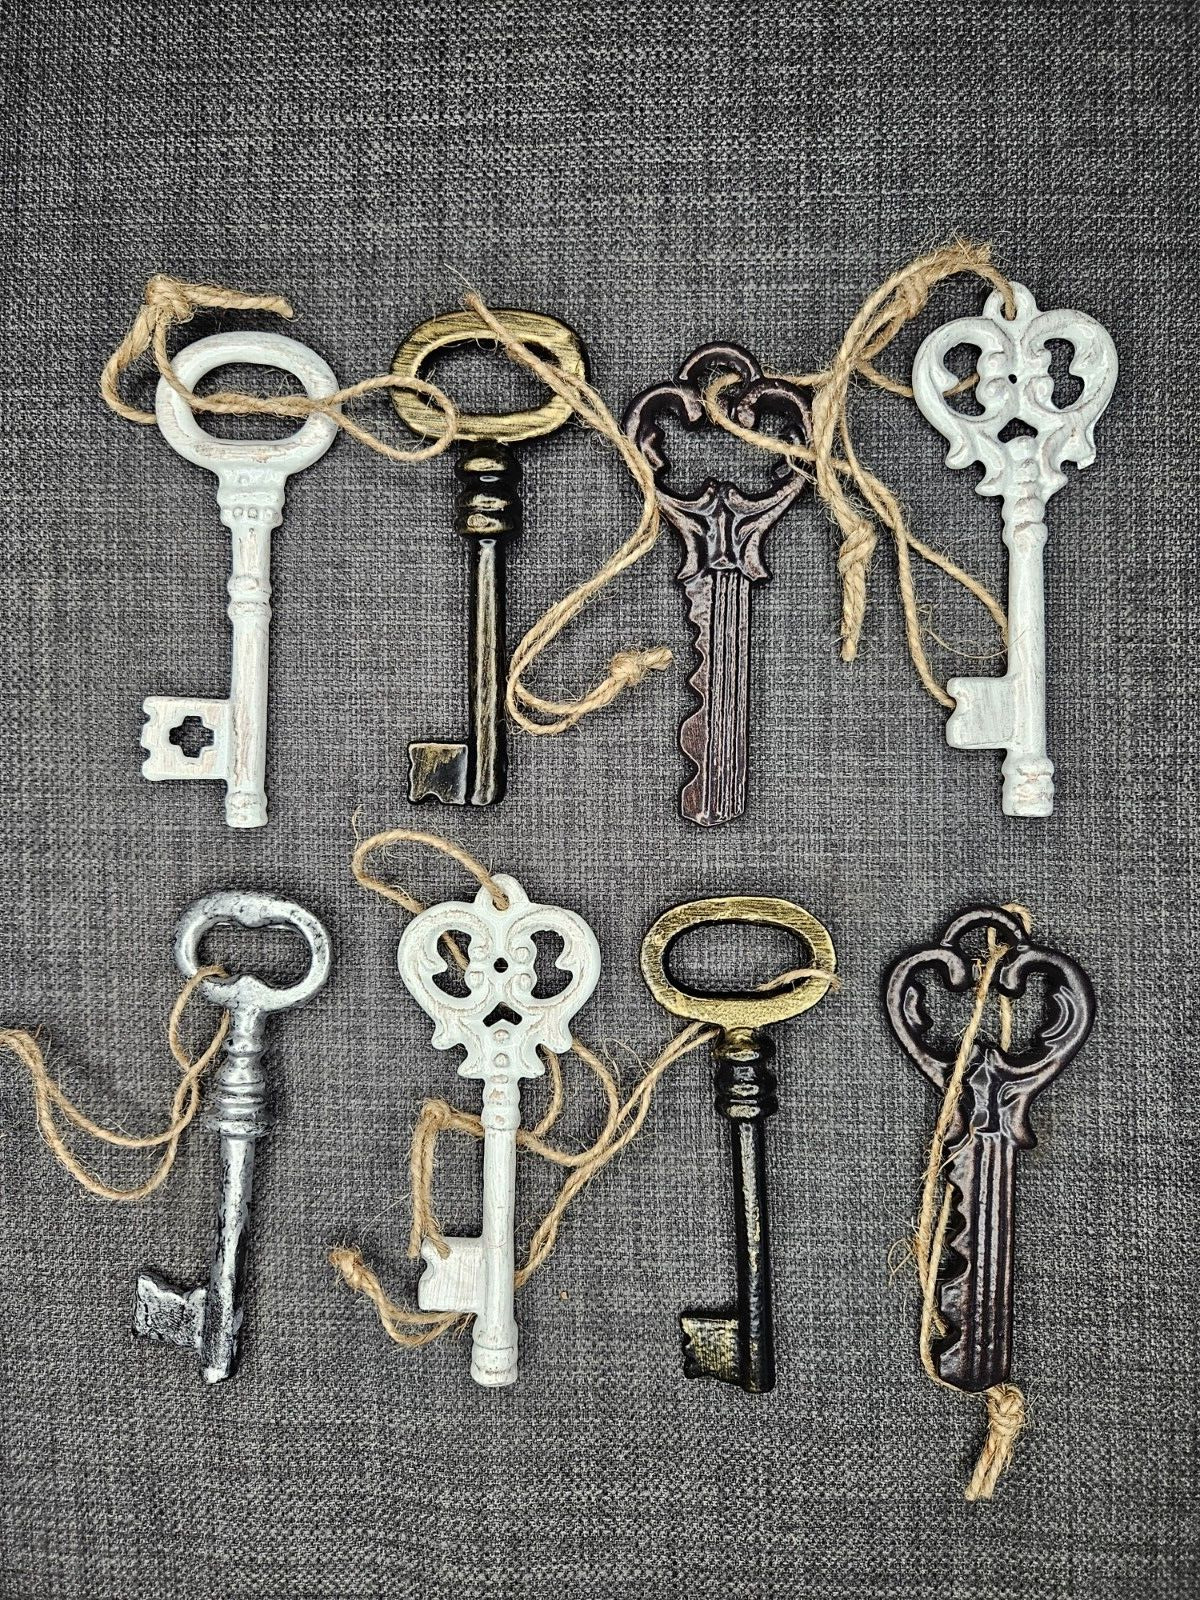 8 Piece Decorative Metal Skeleton Keys - Arts, Crafts, Jewelry